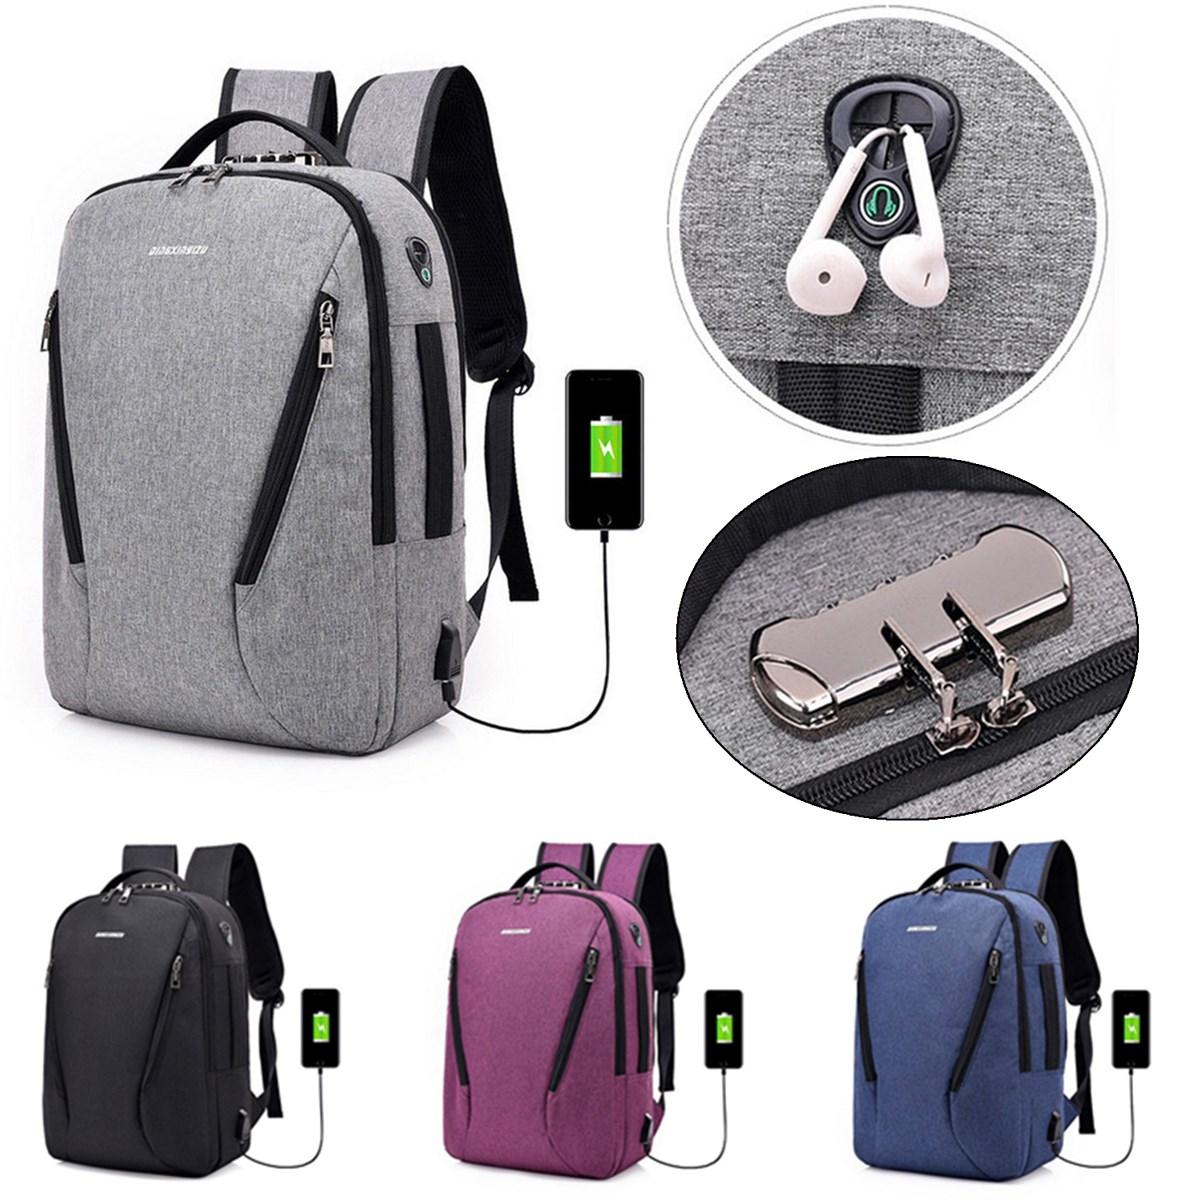 Bang good 17L Anti-theft Men Women Laptop Notebook Backpack USB Charging Port Lock Travel School Bag